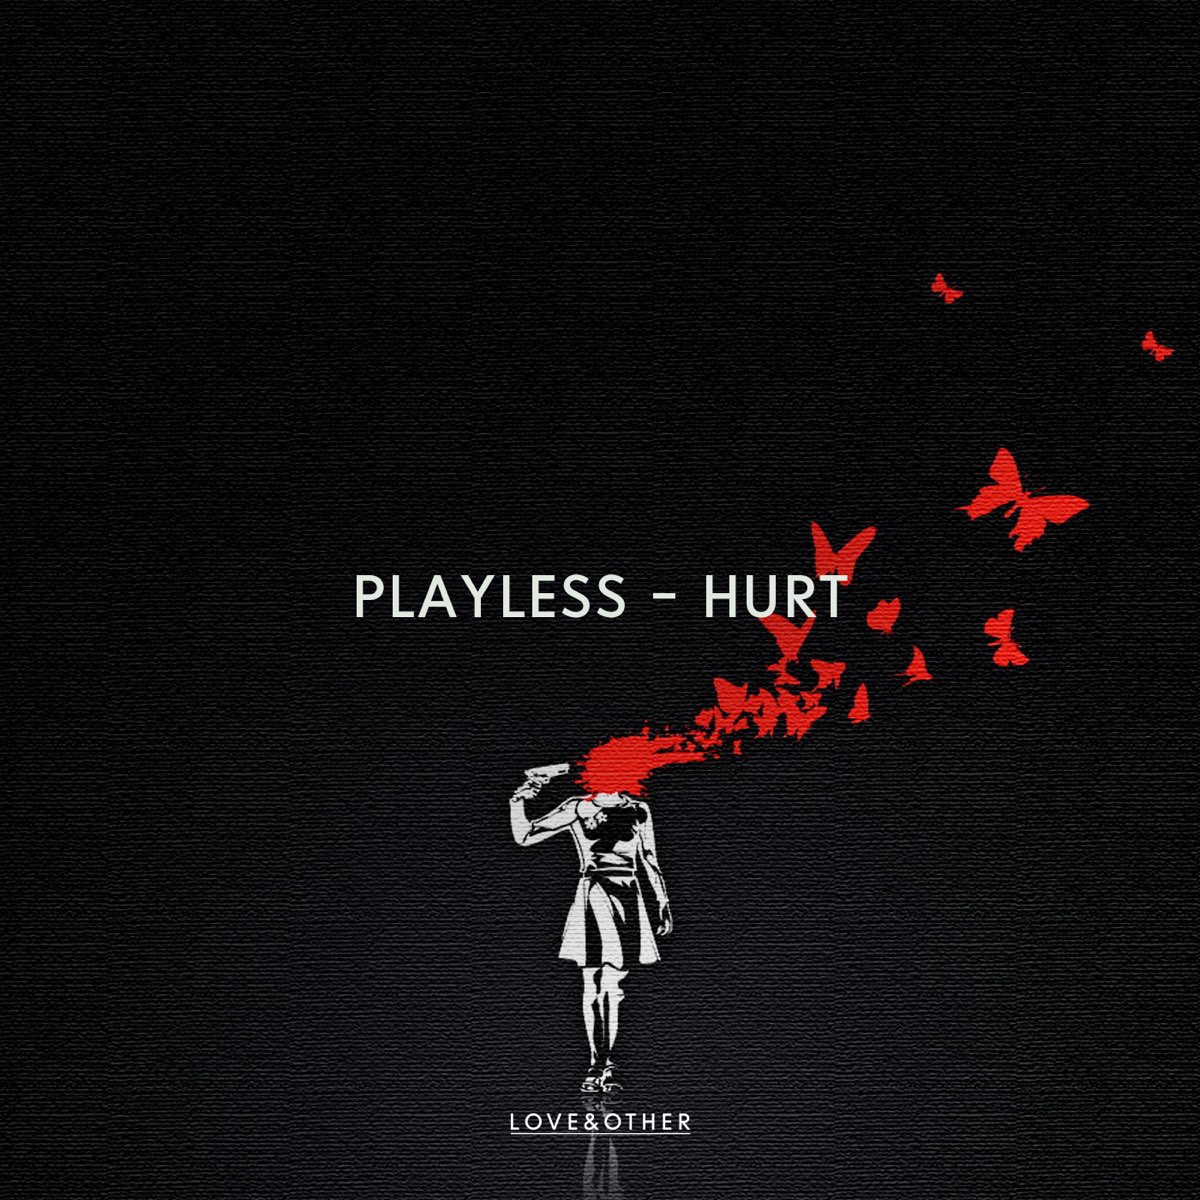 Hurt. Playless. Hurts обложки. Hurt песня. Hurt less